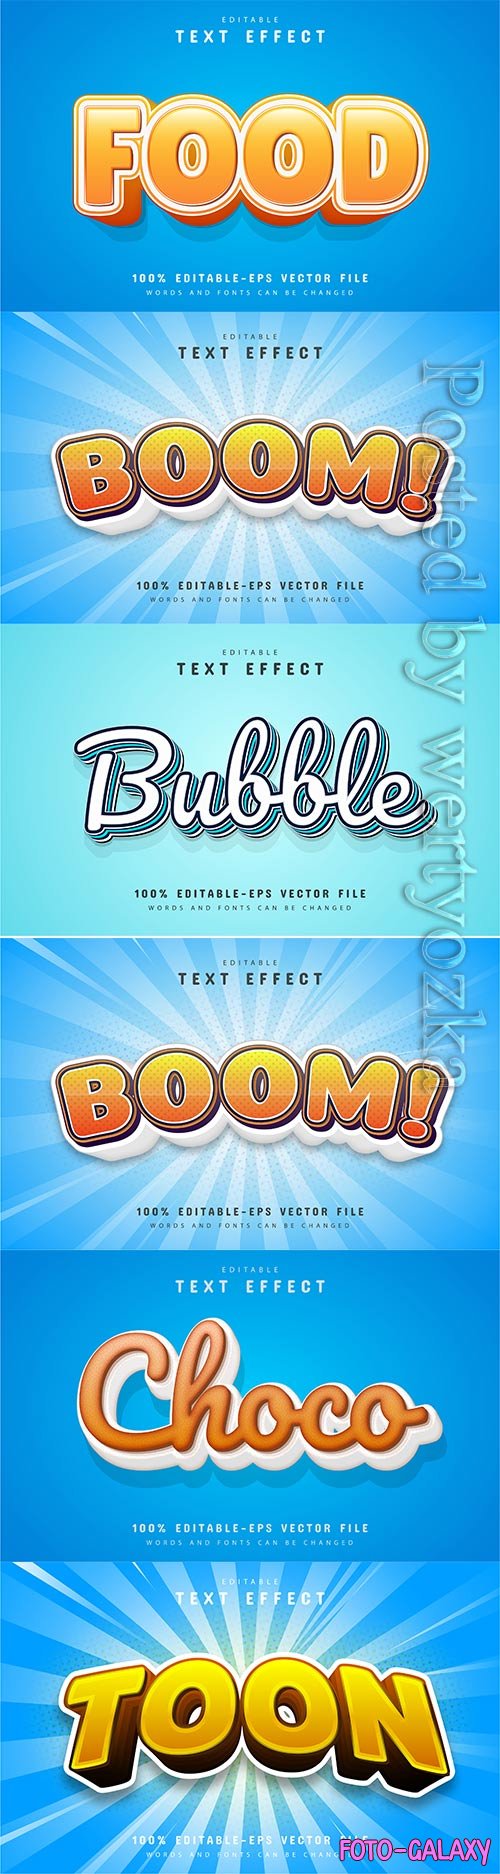 3d editable text style effect vector vol 404